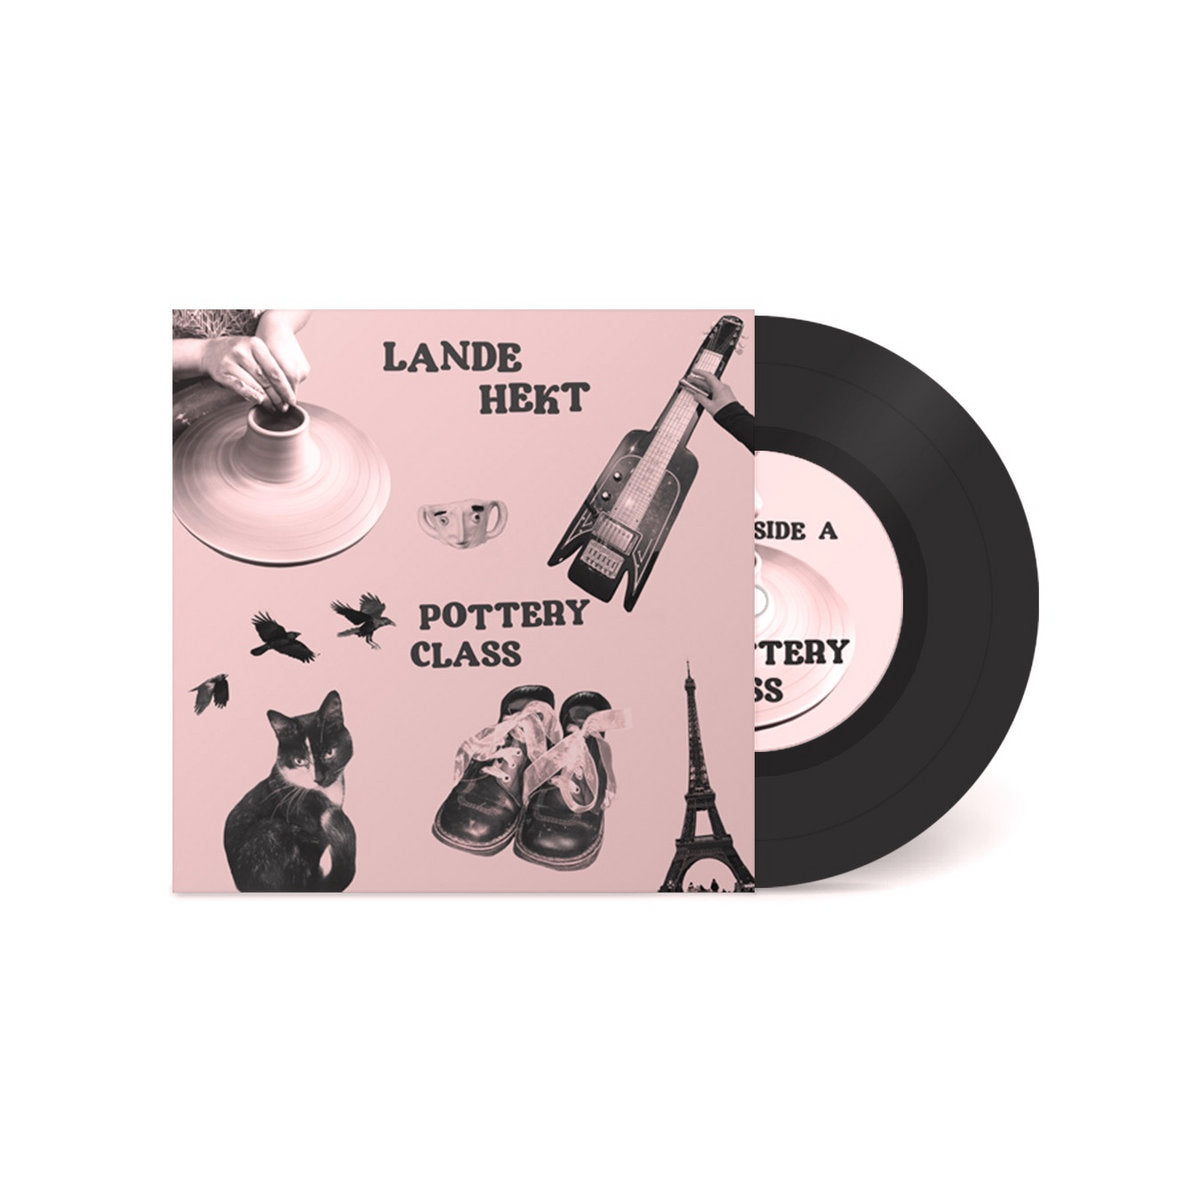 Lande Hekt - Pottery Class: Vinyl 7" Single